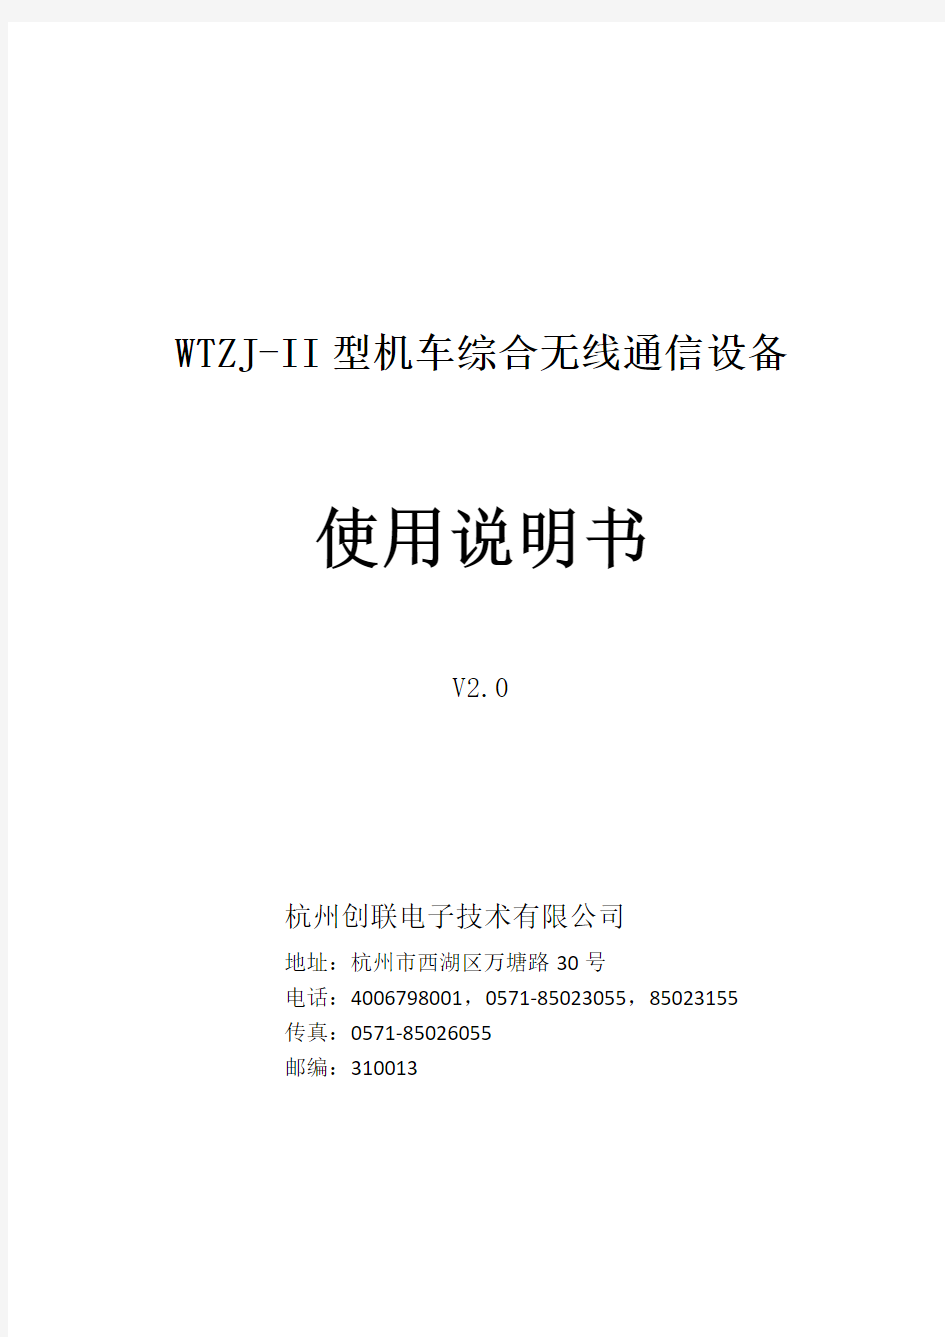 WTZJ-II型机车综合无线通信设备使用说明书V2.0